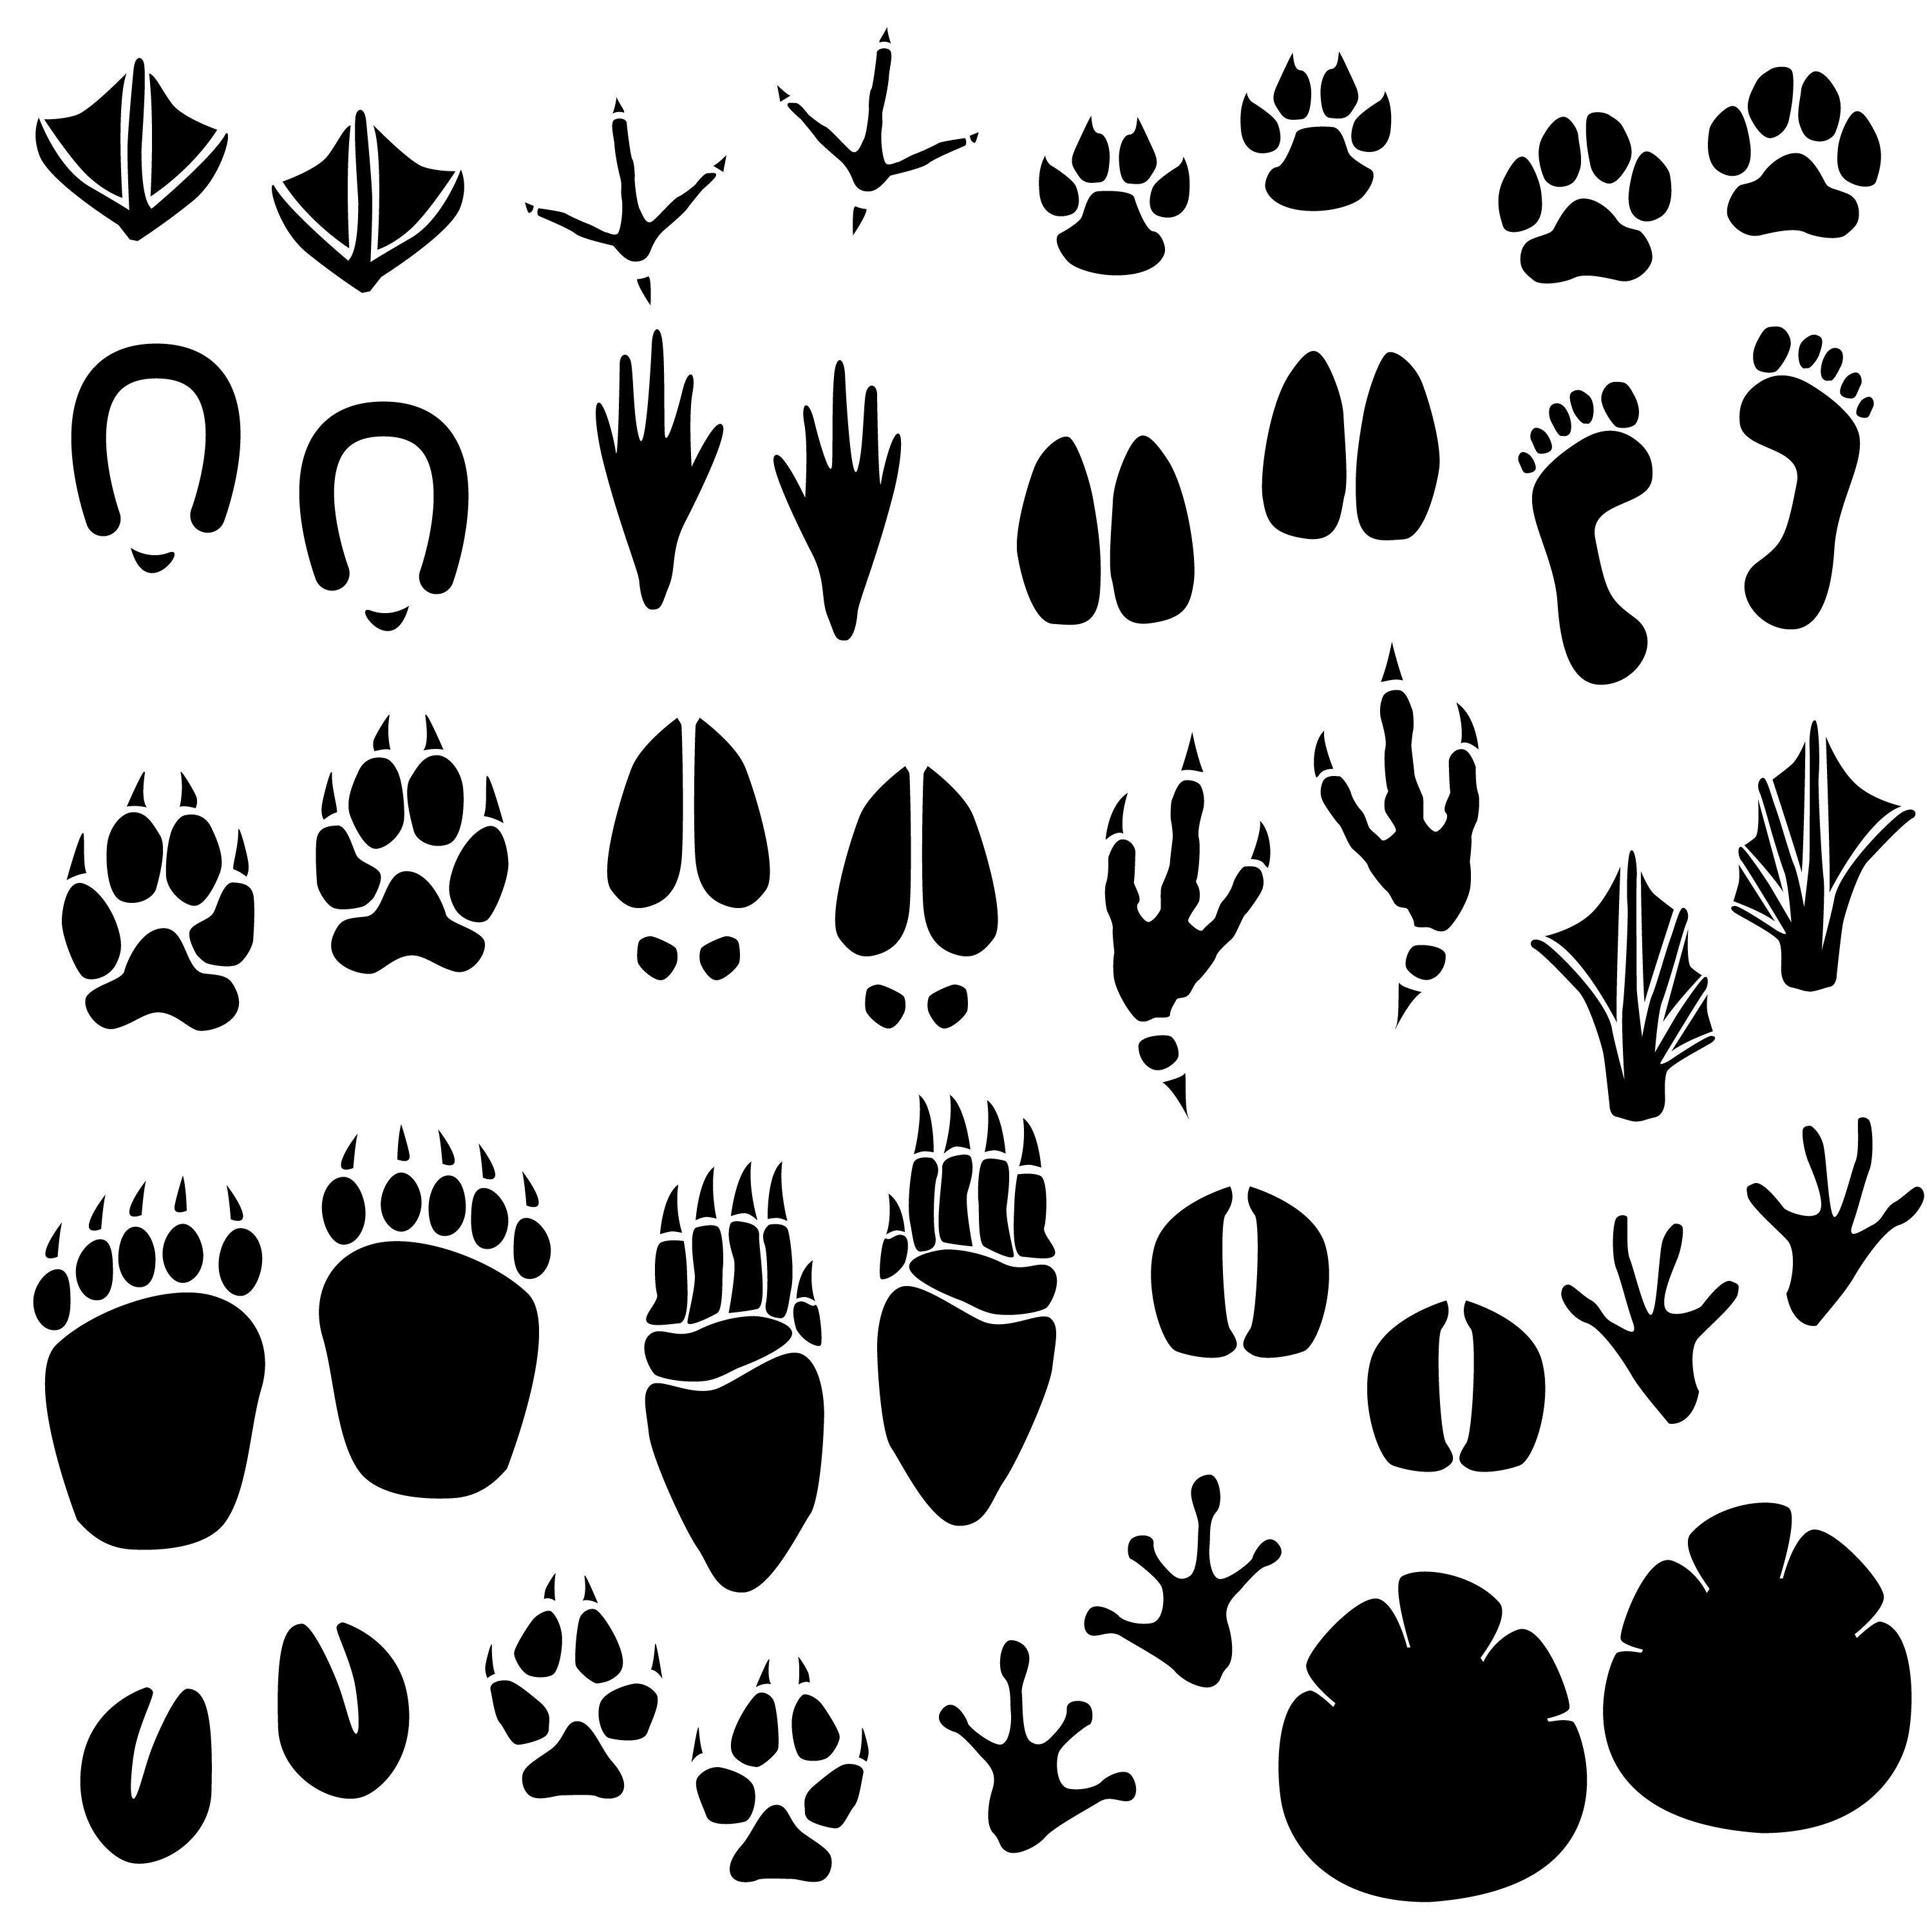 Animal Tracks Clipart, Footprints Graphic by Paulaparaula